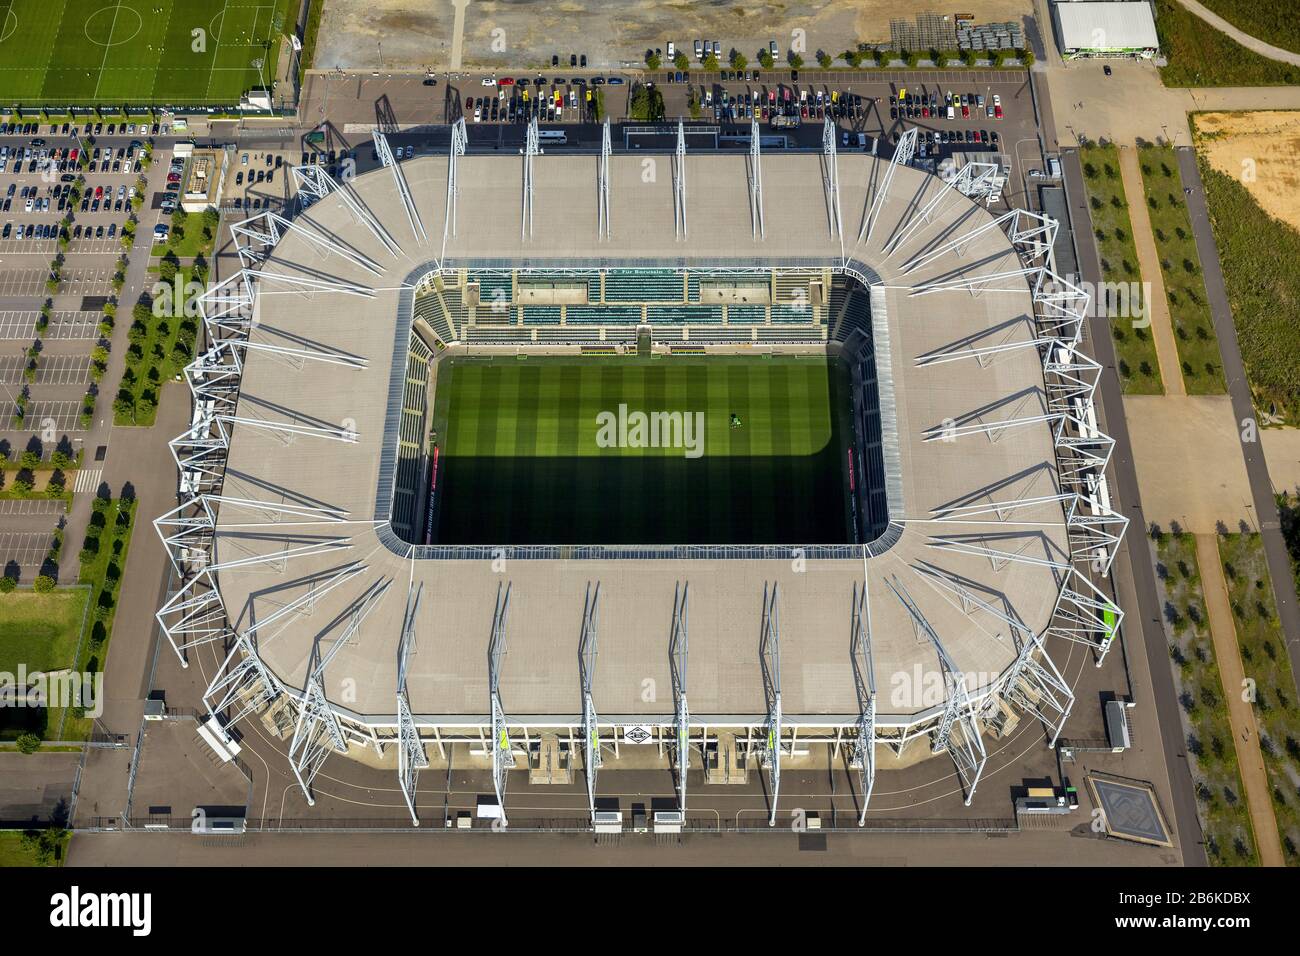 , Borussia-Park Stadium of the football team Borussia Monchengladbach, aerial view, 12.08.2014, Germany, North Rhine-Westphalia, Moenchengladbach Stock Photo